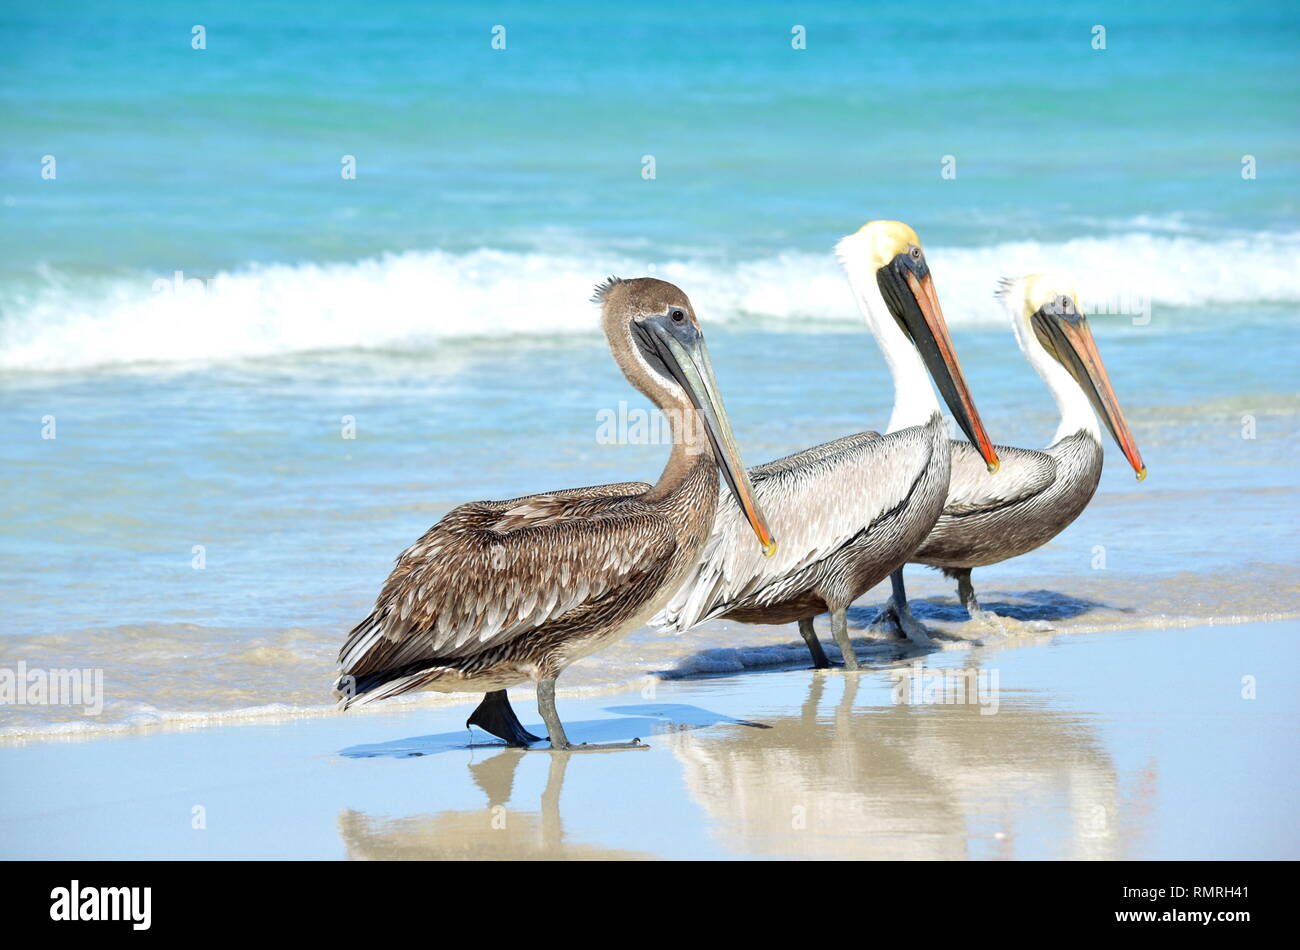 Brown Pelicans Pelecanus occidentalis walking on the beach among people in Varadero Cuba. Marine wildlife encounters Stock Photo